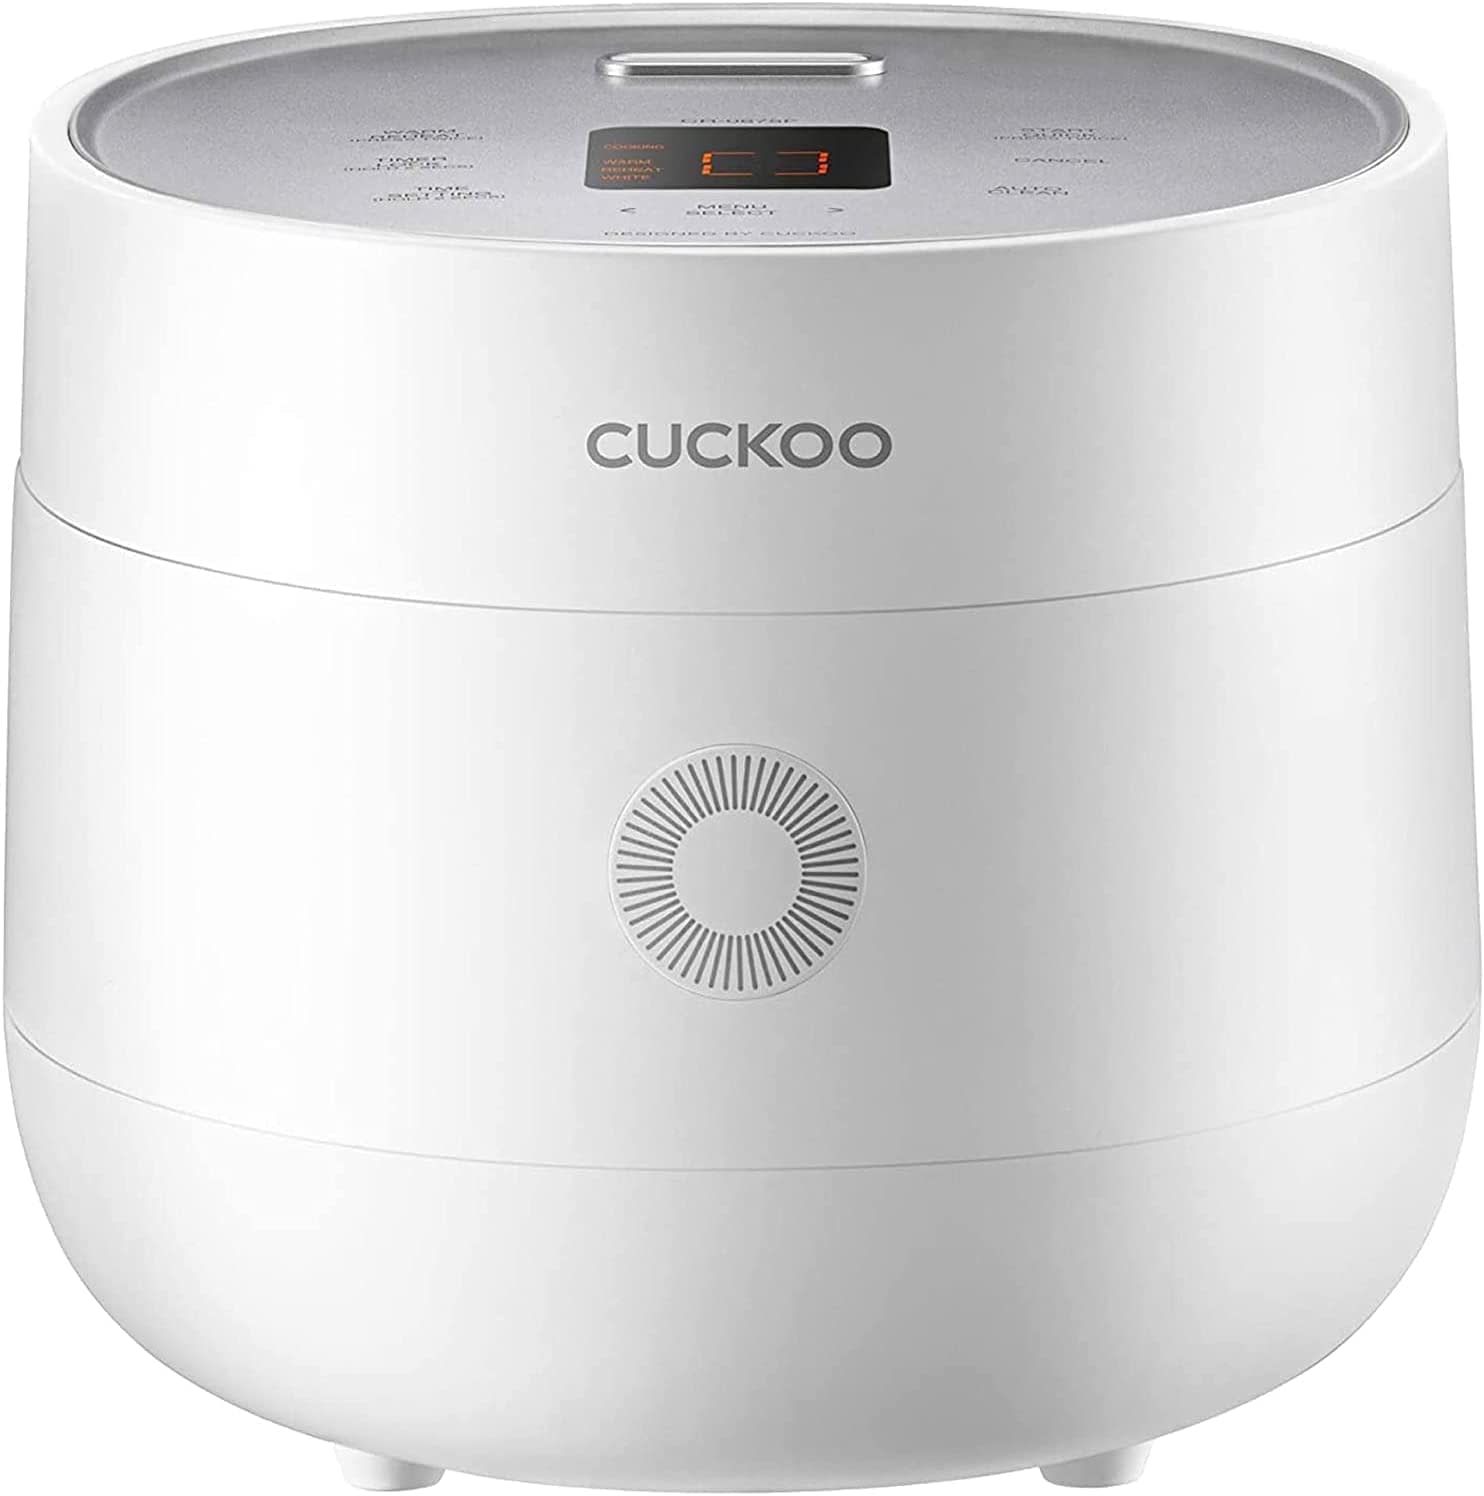 Cuckoo CR-0675F Rice Cooker